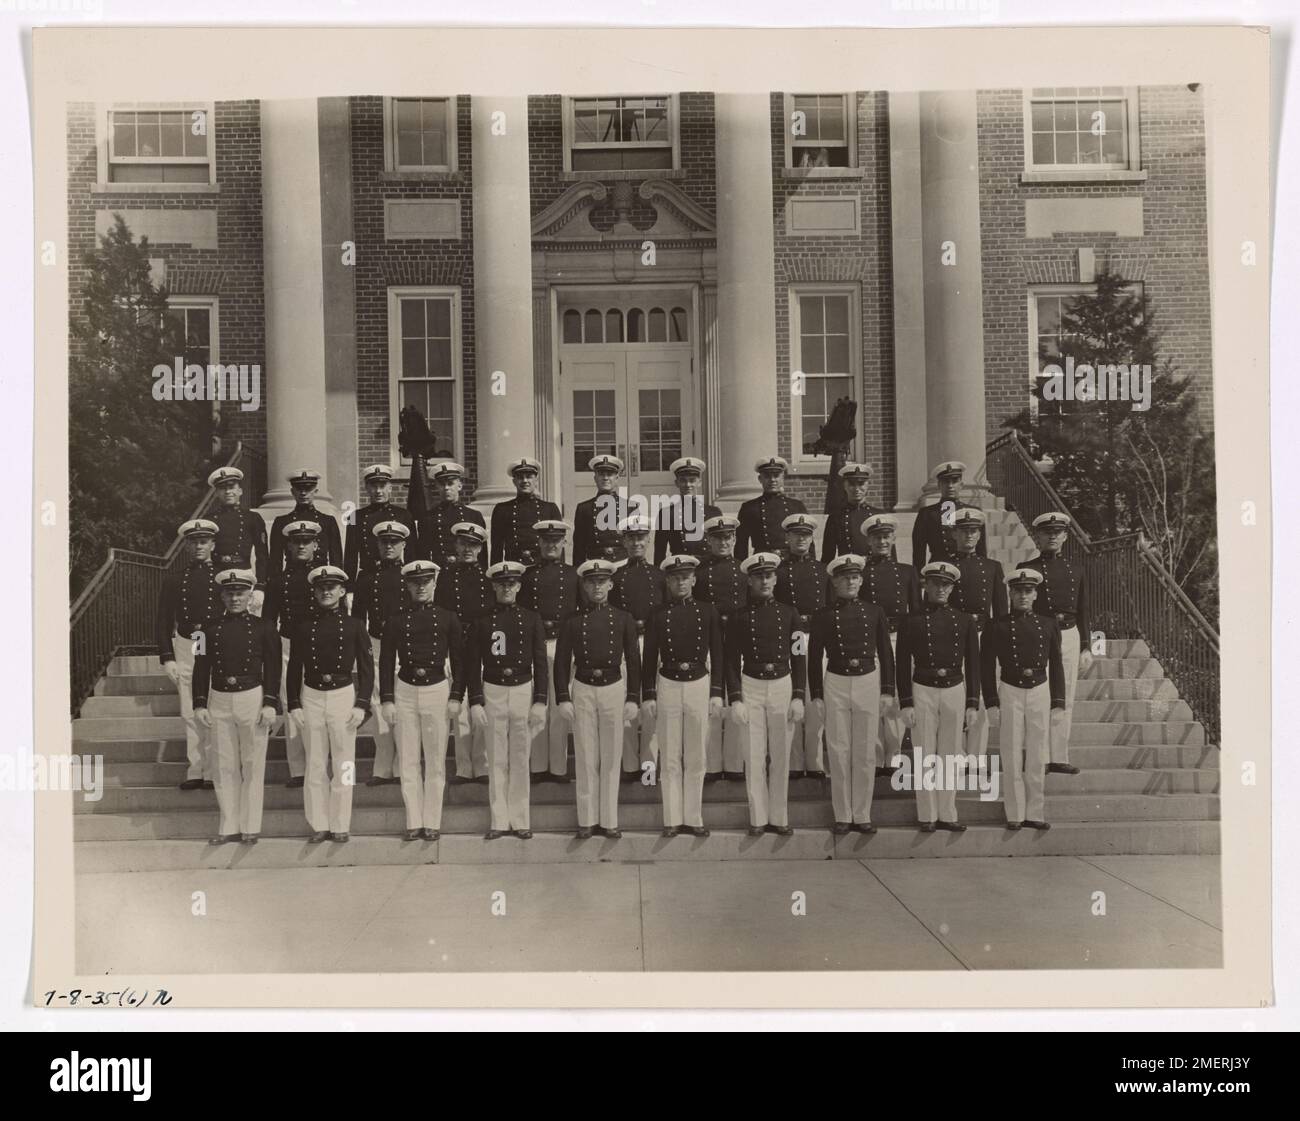 The Graduation Class of 1935. Coast Guard Academy. The Graduation Class of 1935. Reading from Left to right: First row: C.E. Columbus, G.R. Evans, F.V. Helmer, R.D. Dean, W.L. Hancock, R.L. Mellen, W.W. Vennel, R. Baxter, E.A. Cascini, D.W. Weller. Middle Row: F.M. McCabe, J.P. White, L.E. Brunner, W.J. Conley, Jr. W.H. Rayburn, W.L. Sutter, G.F. Schumacher, W.J. Lawrence, N.C. McCormick, G.L. Rollins, B.E. Scalan. Top Row: O.D. Weed, C. Tighe, F.F. Nichols, F.L. Westbrook, A.F. Werner, J.R. Scullion, R.F. Shunk, C.M. Opp, J. Montrello. Stock Photo